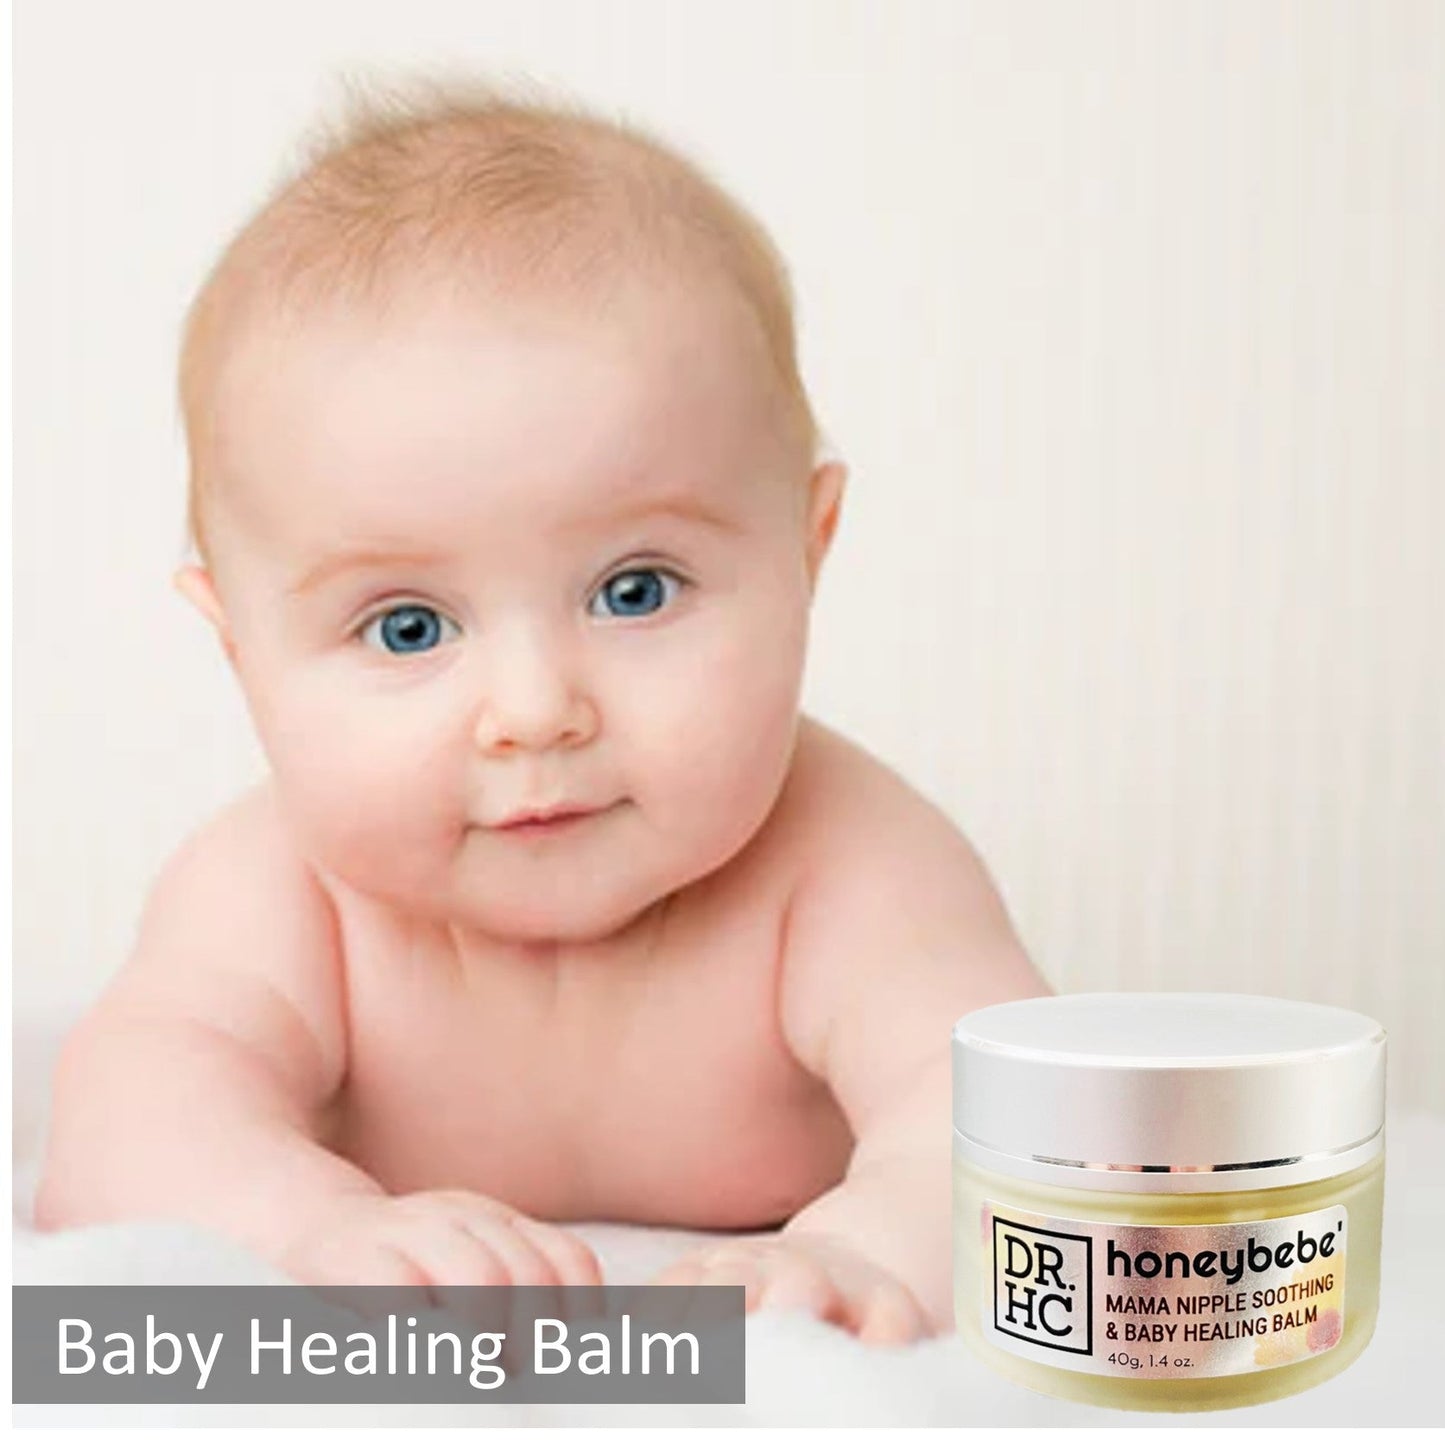 DR.HC Honeybebe’ Mama Nipple Soothing & Baby Healing Balm (100% Organic, Natural & Vegan) (30g, 1oz.)